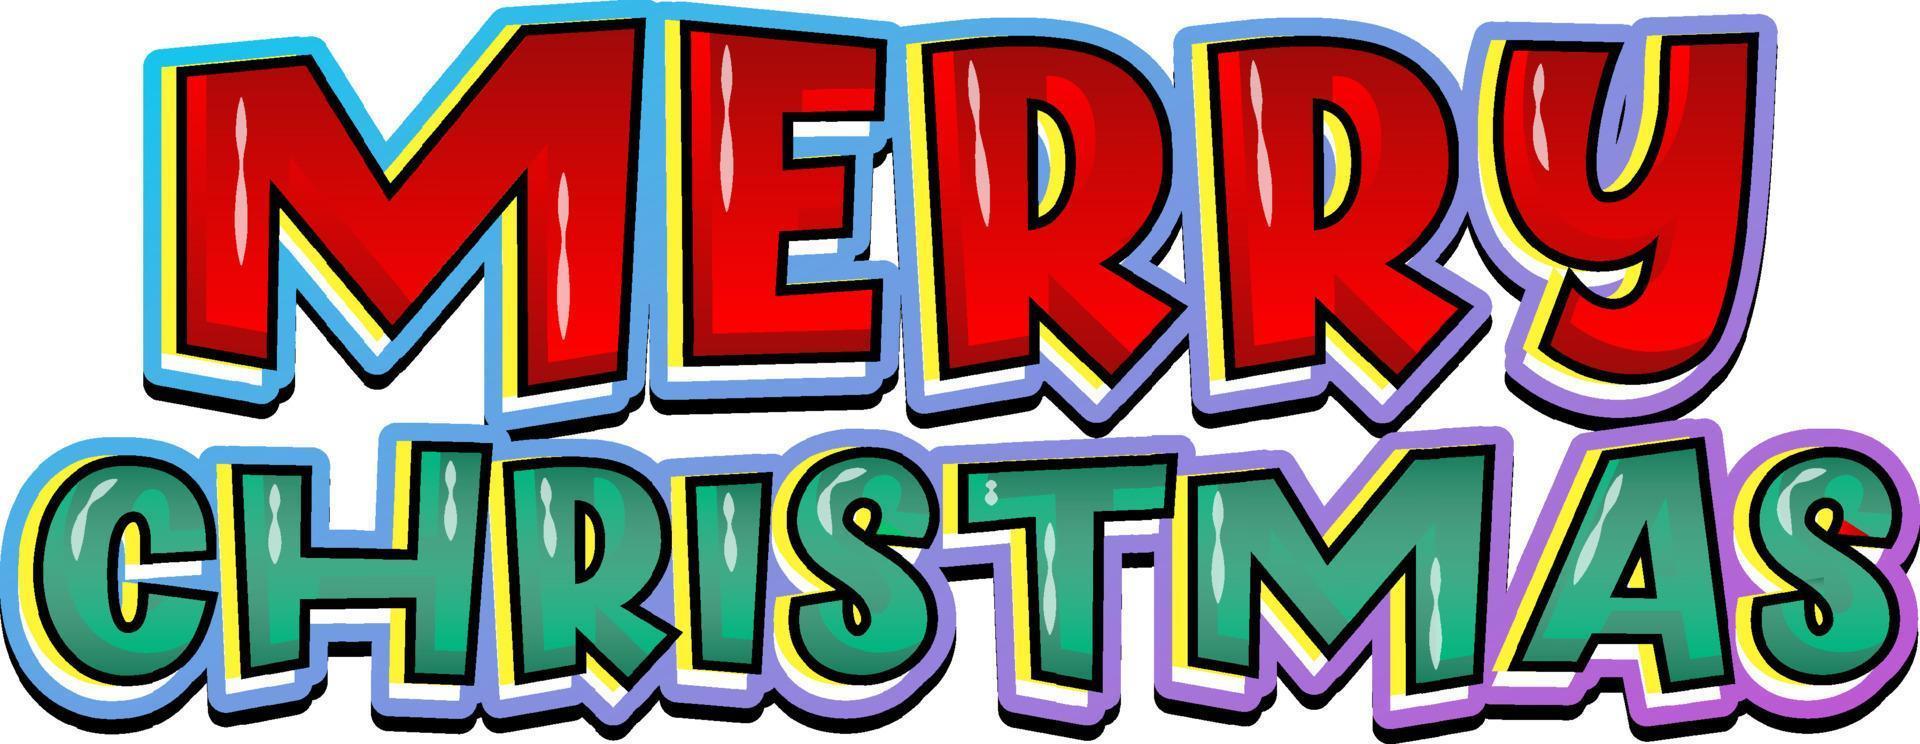 Merry Christmas font logo banner vector